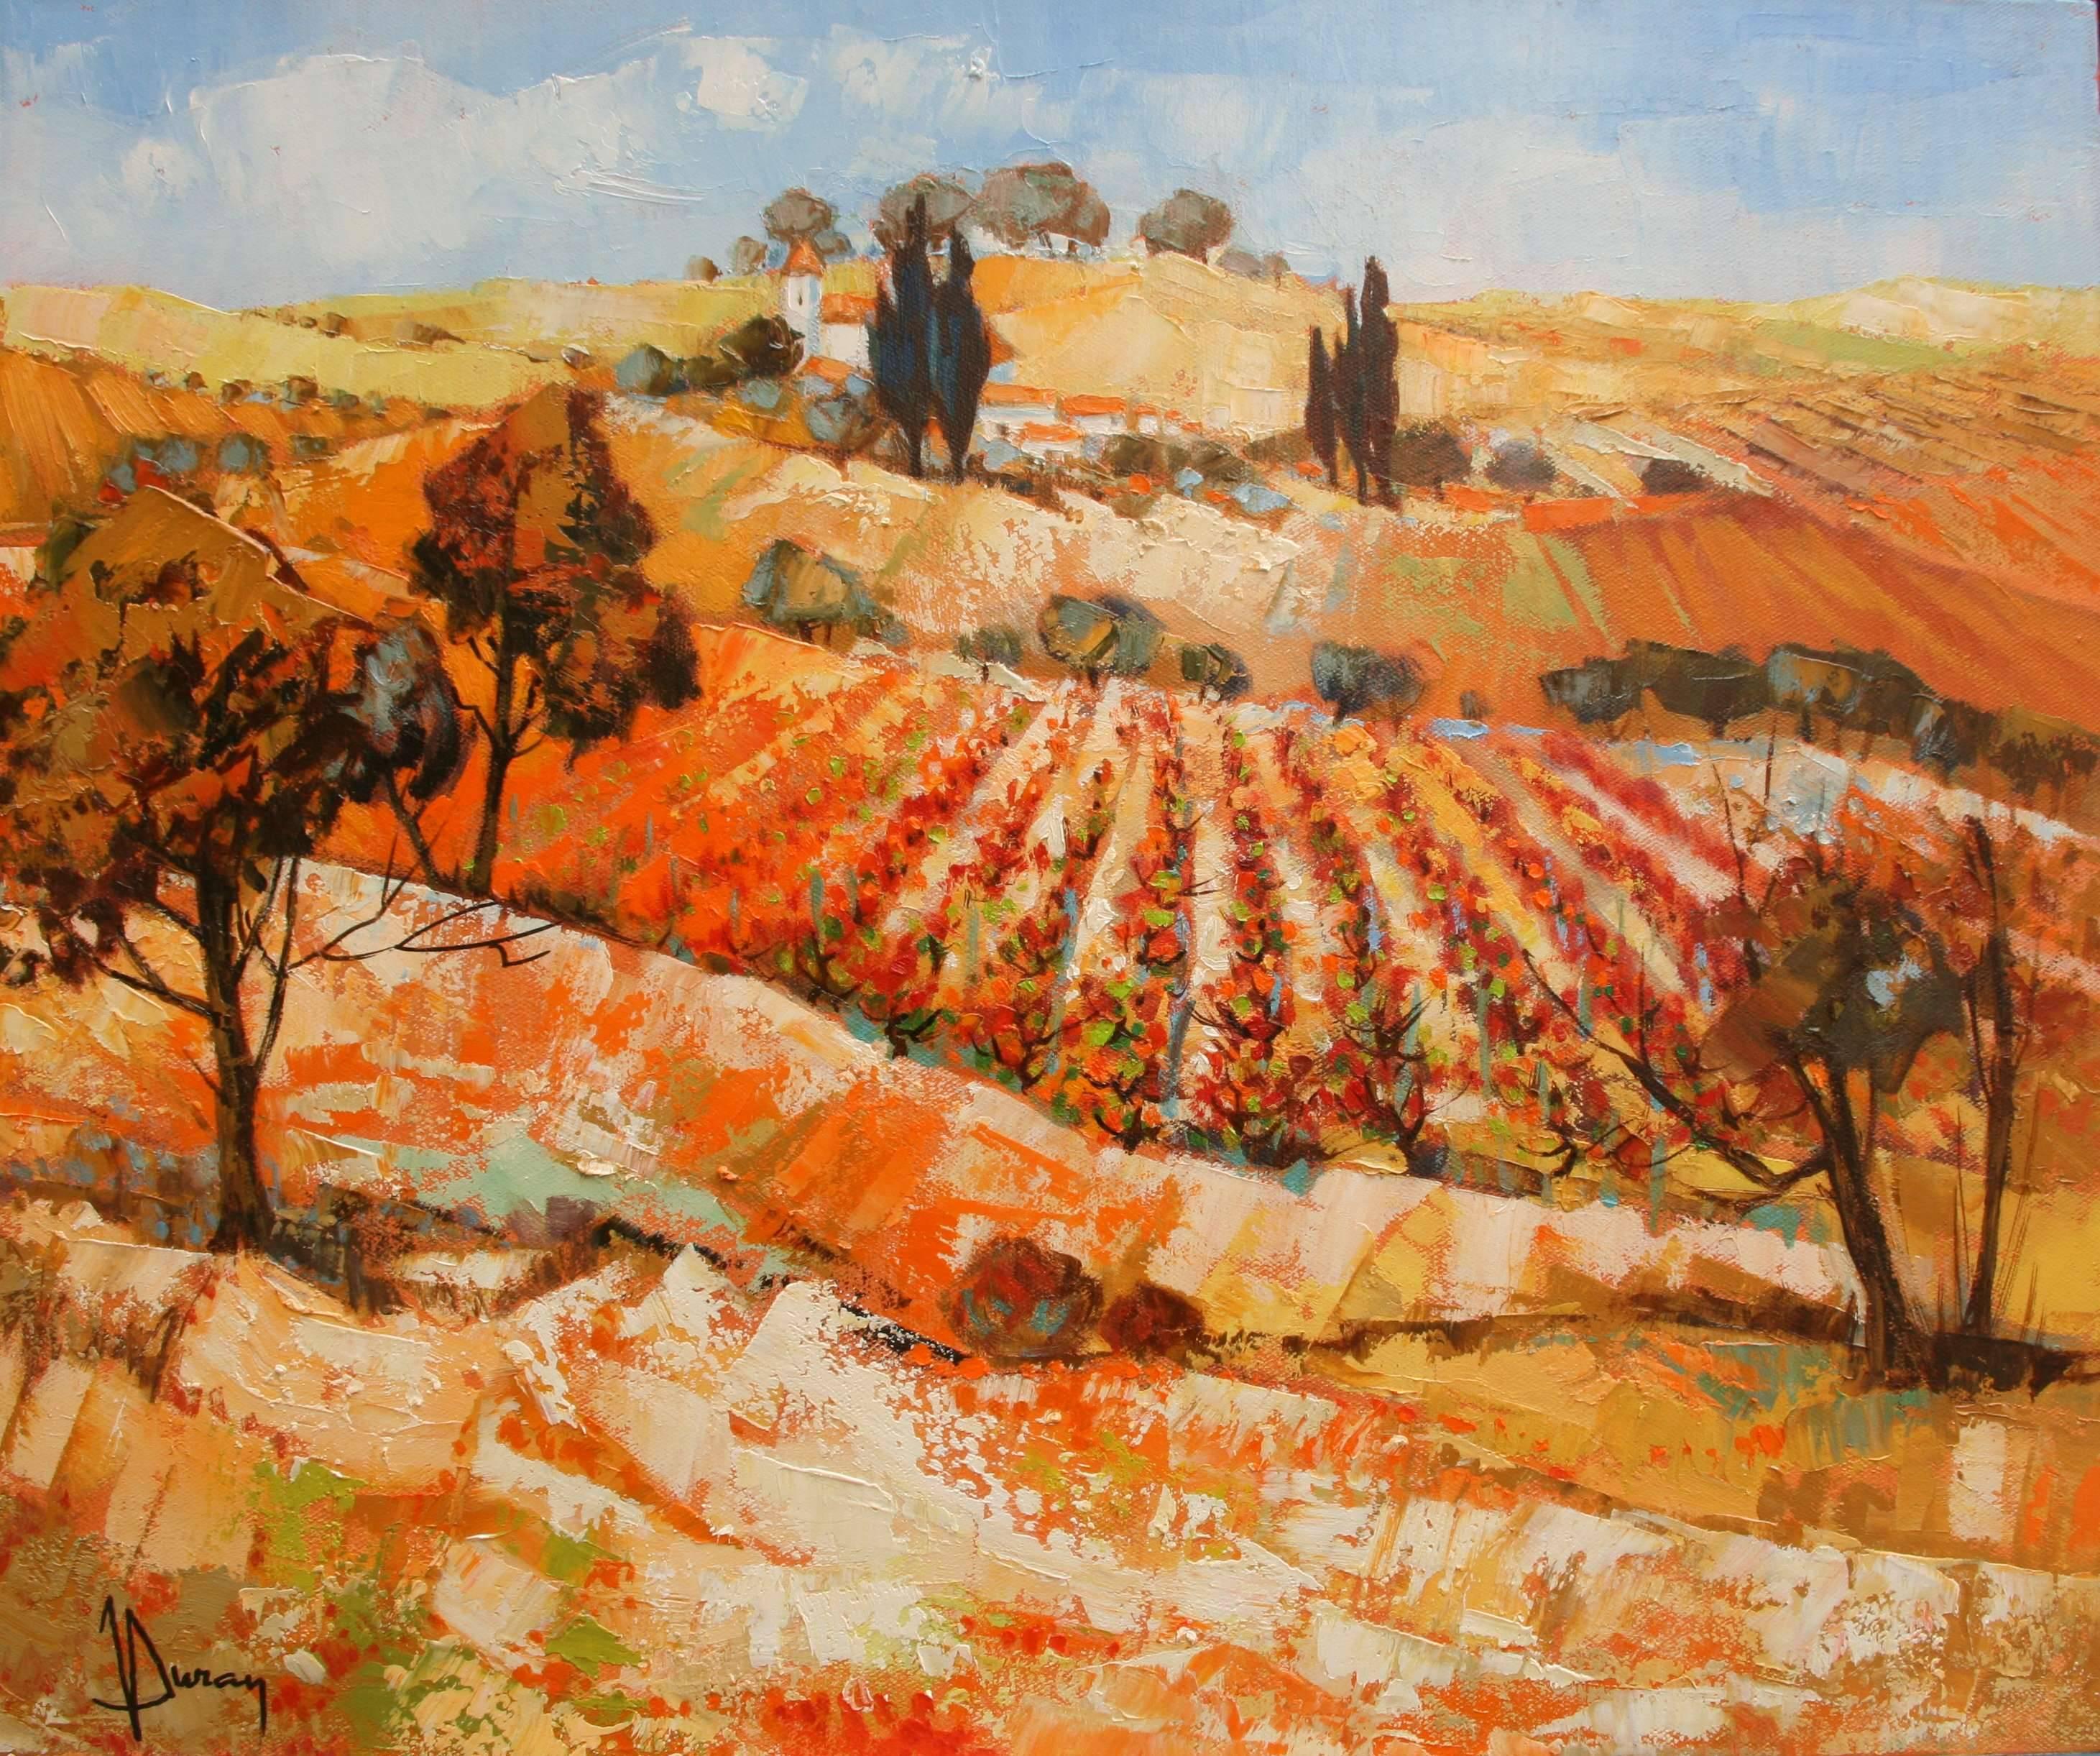 The autumn hill - Painting by Jori Duran